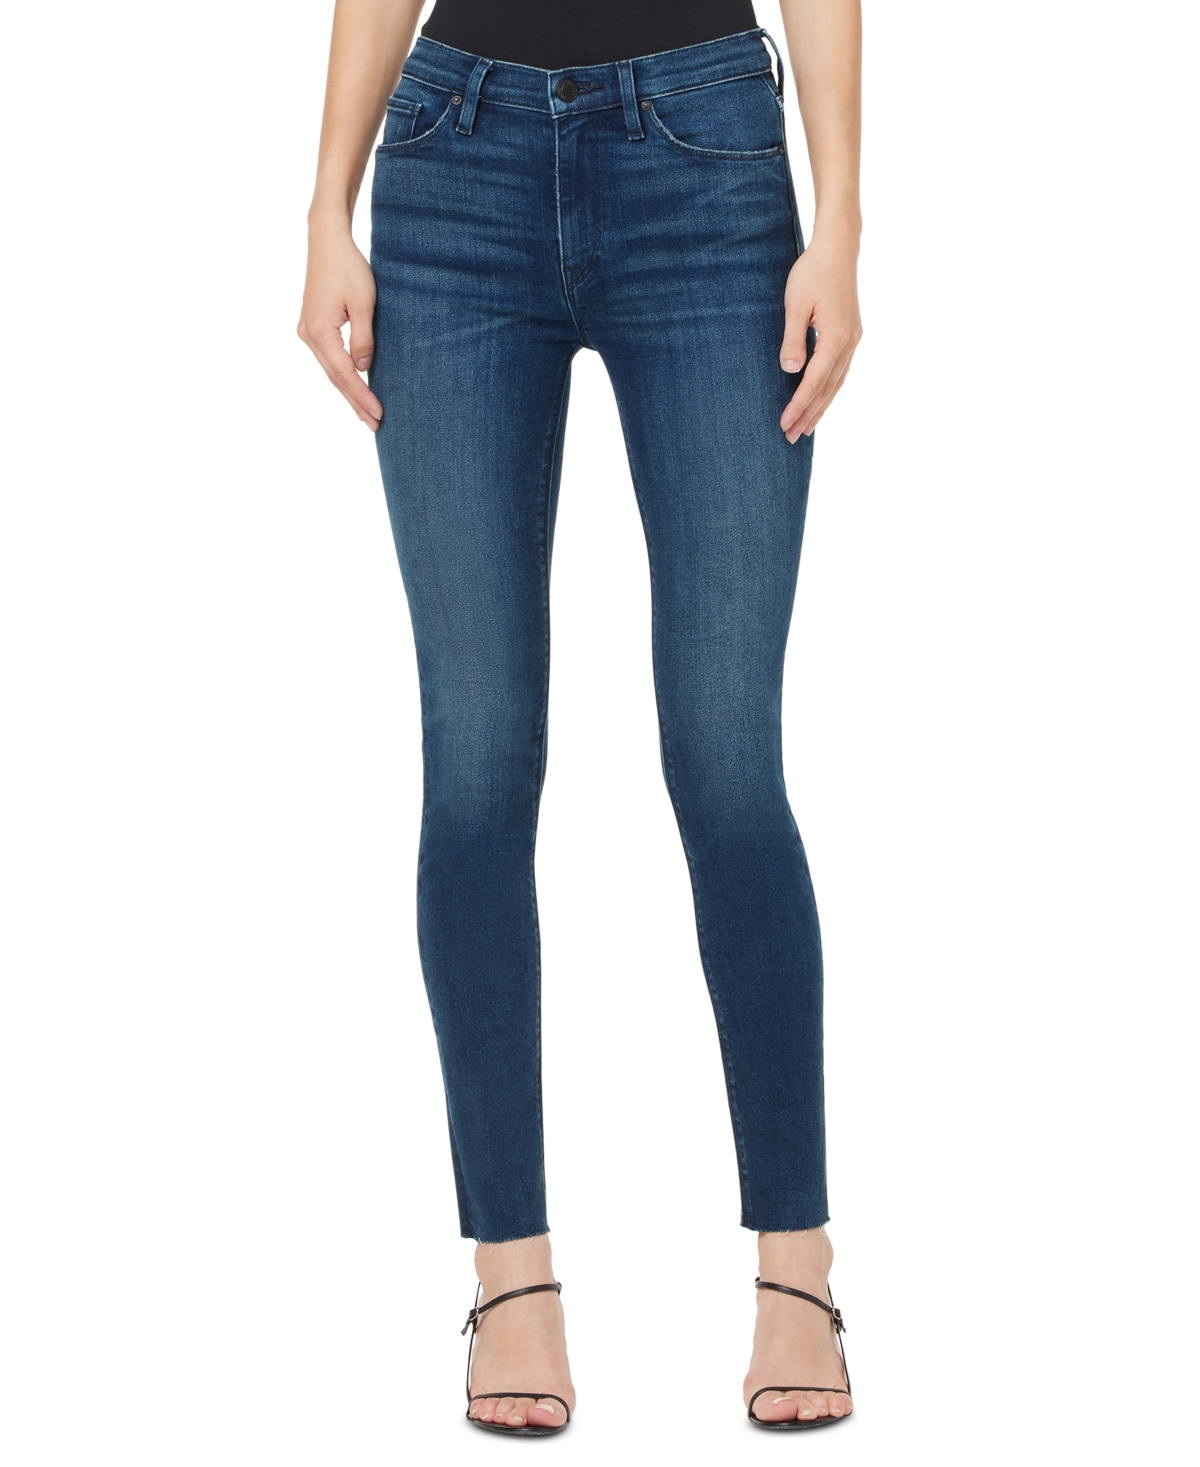  Hudson Jeans Barbara Women's High-Rise Super-Skinny Ankle Jeans